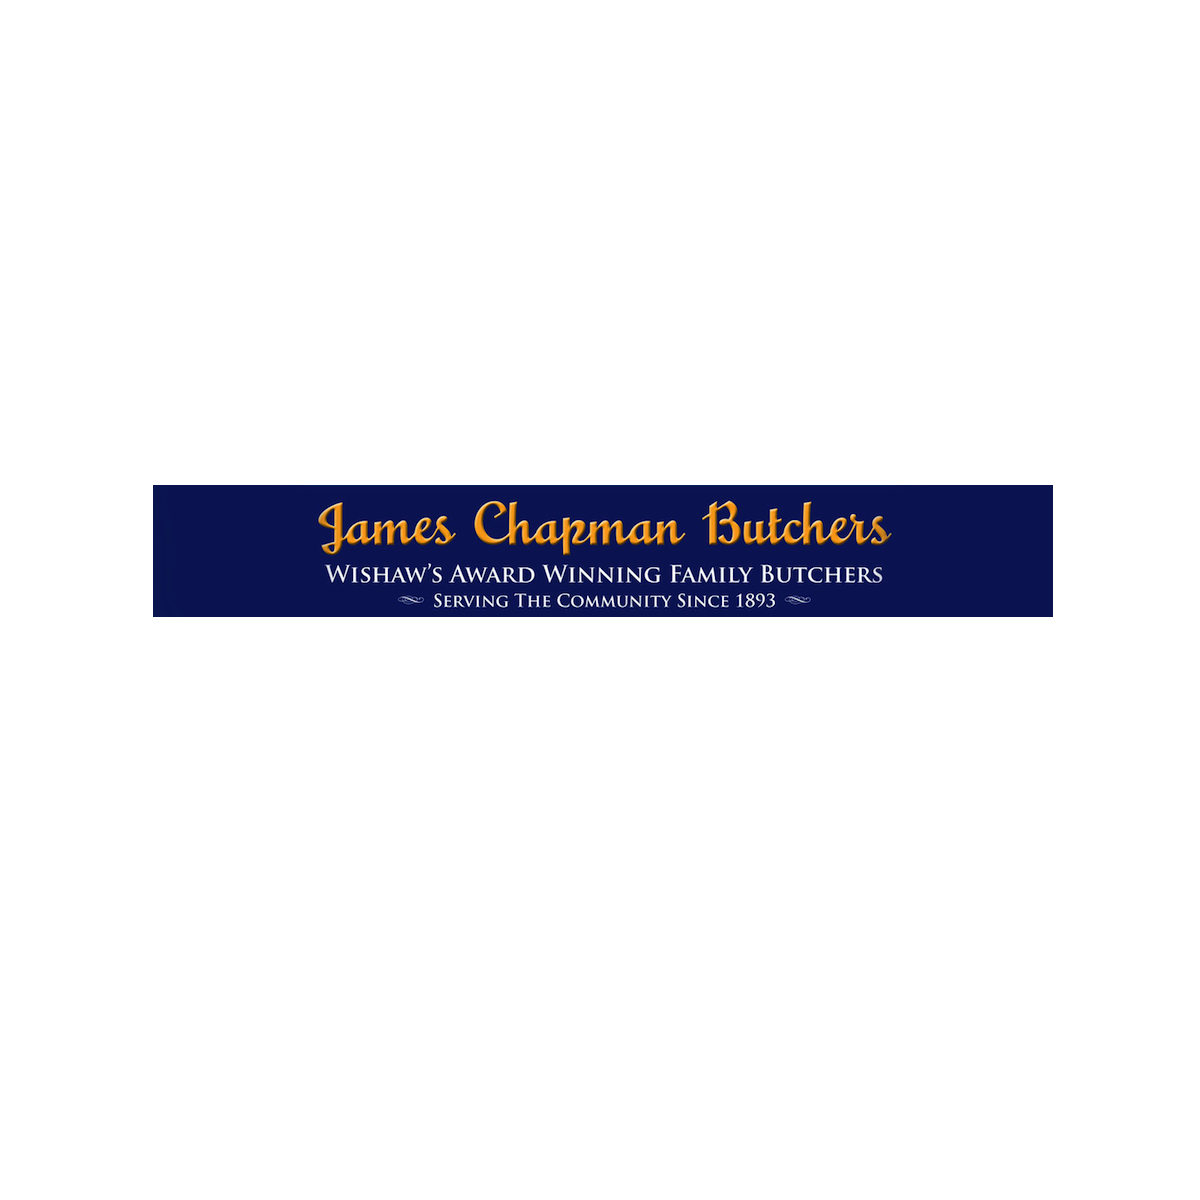 James Chapman Butchers brand logo